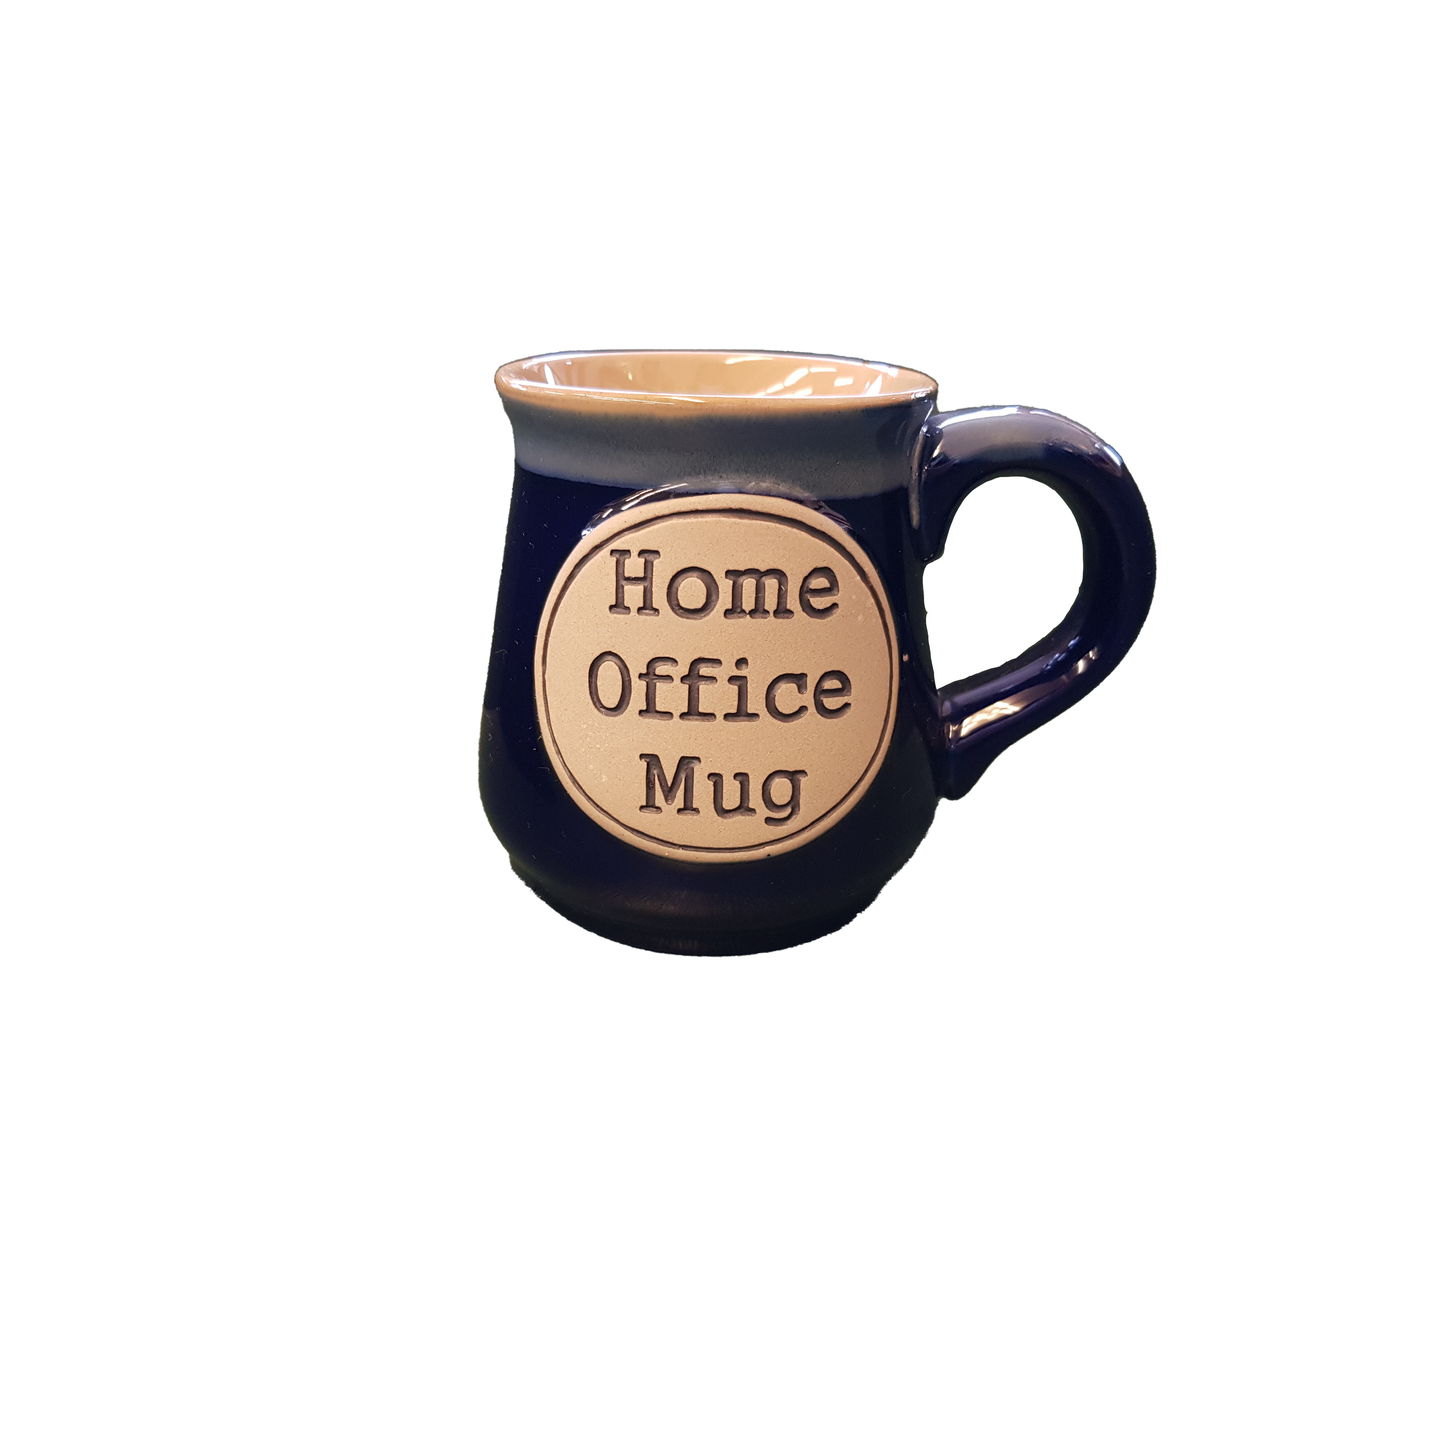 Home Office Mug